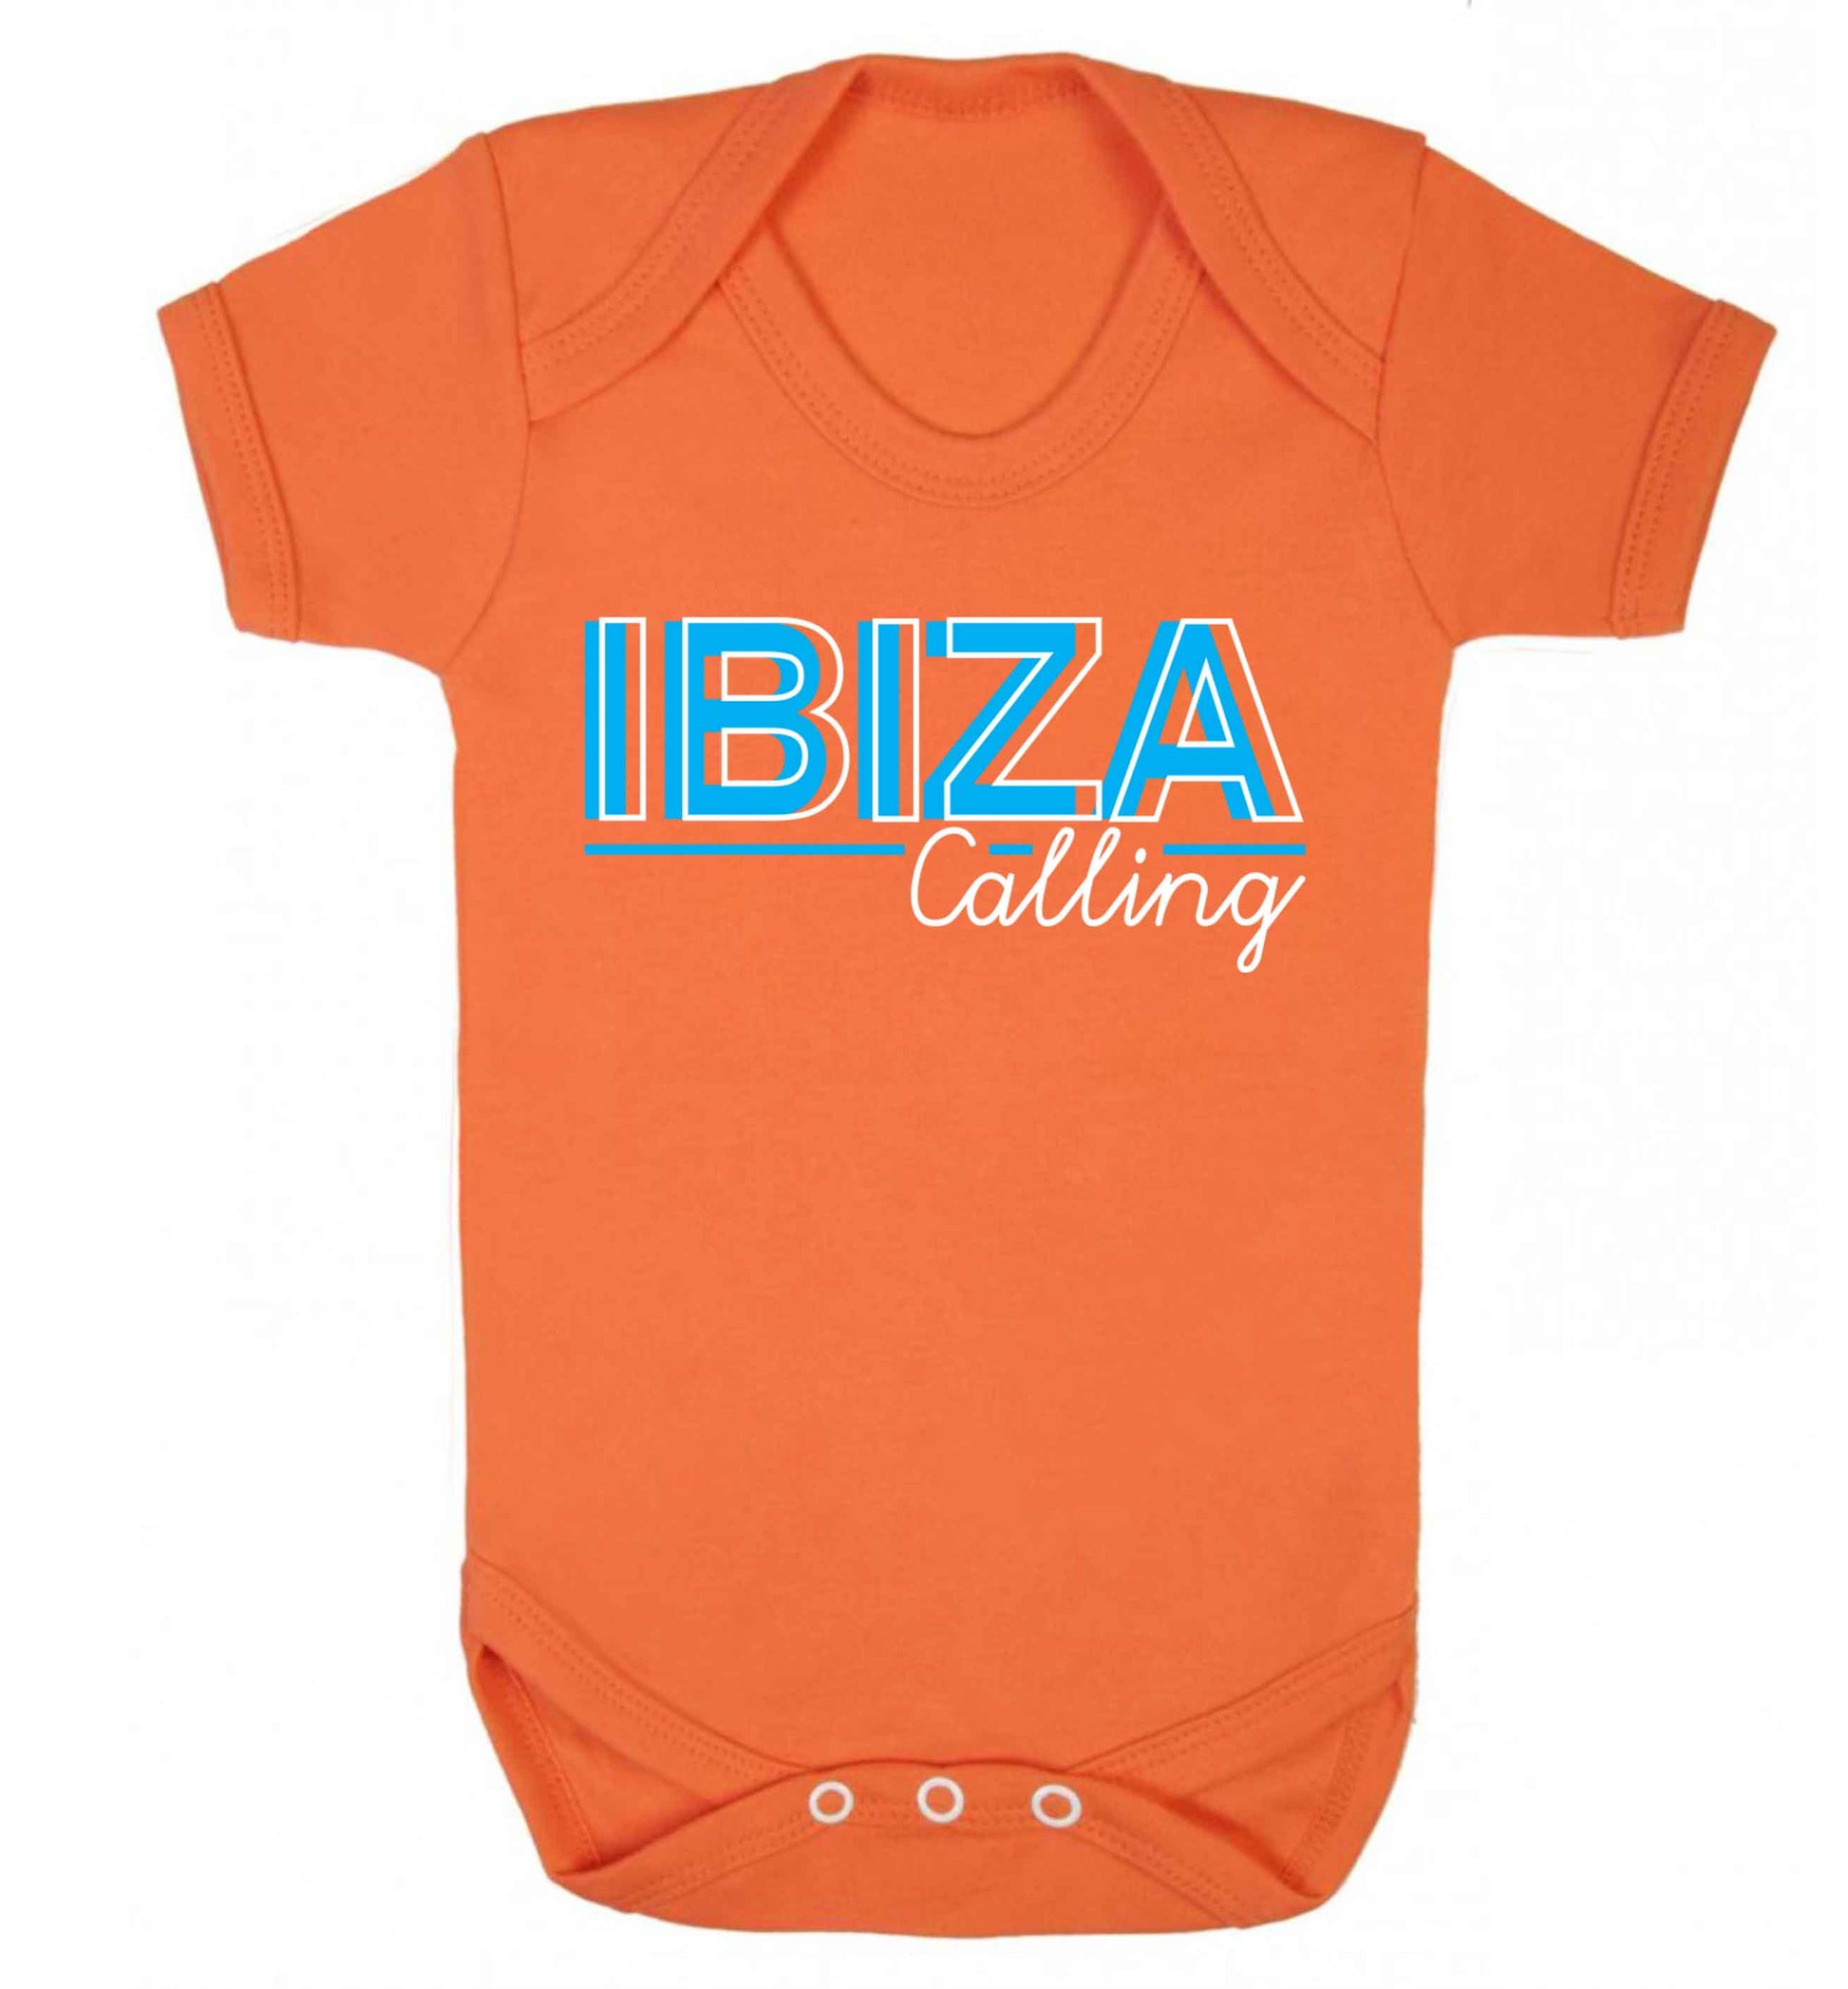 Ibiza calling Baby Vest orange 18-24 months